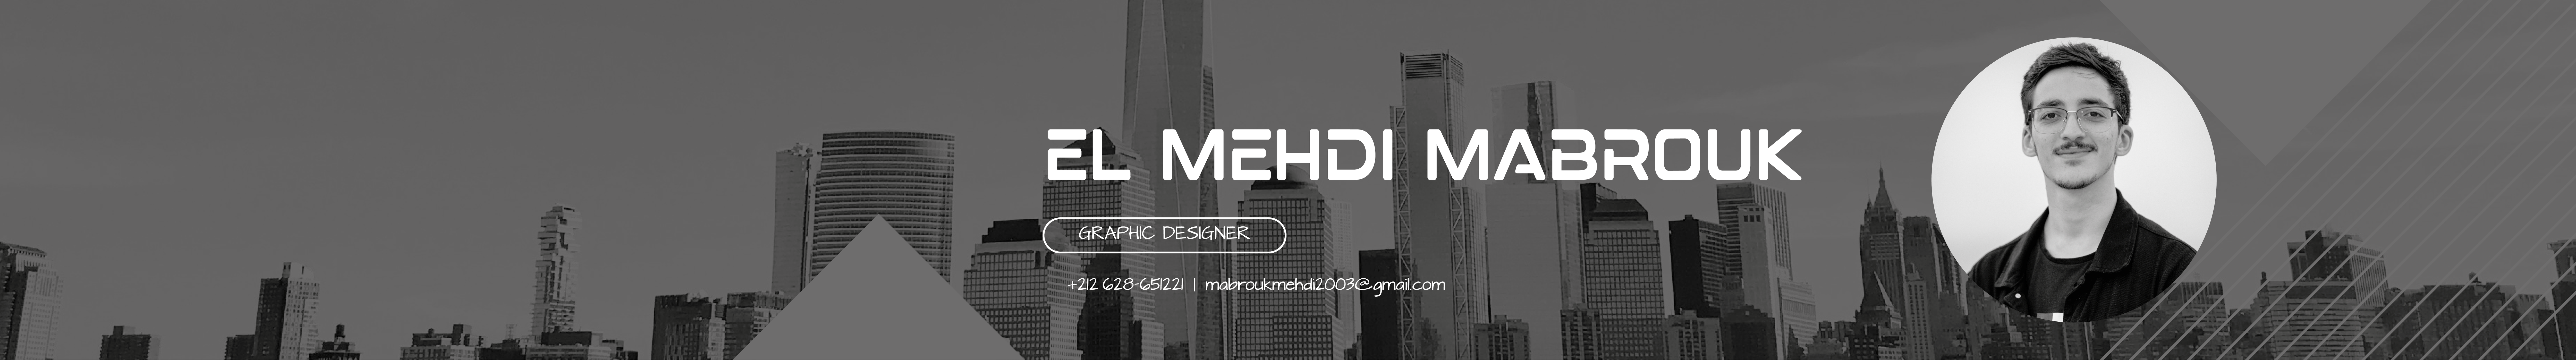 El Mehdi Mabrouk profil başlığı